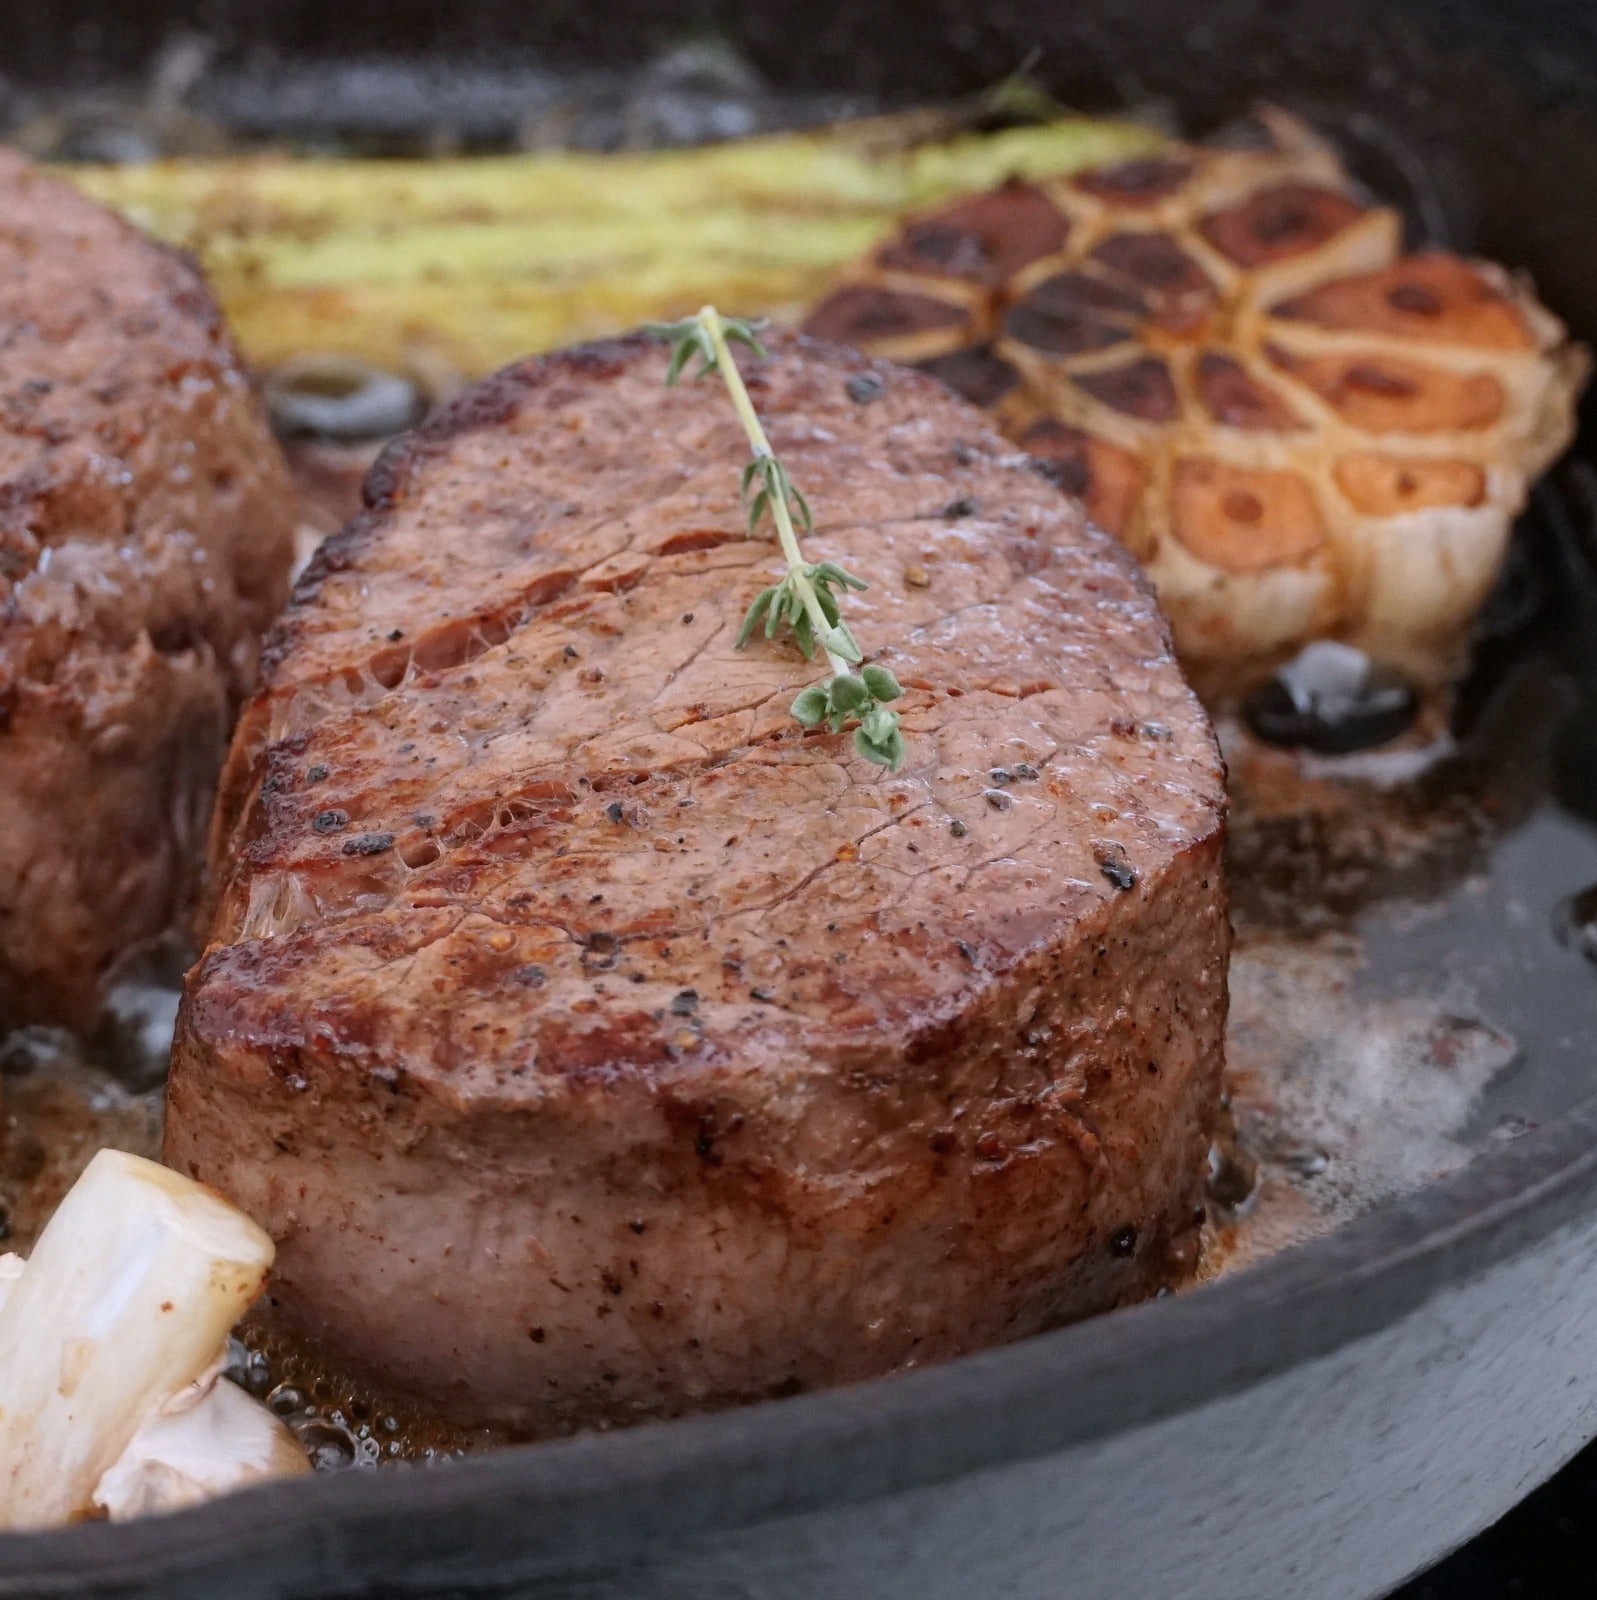 Grass-Fed Premium Beef Filet Steak Australia (200g) - Horizon Farms